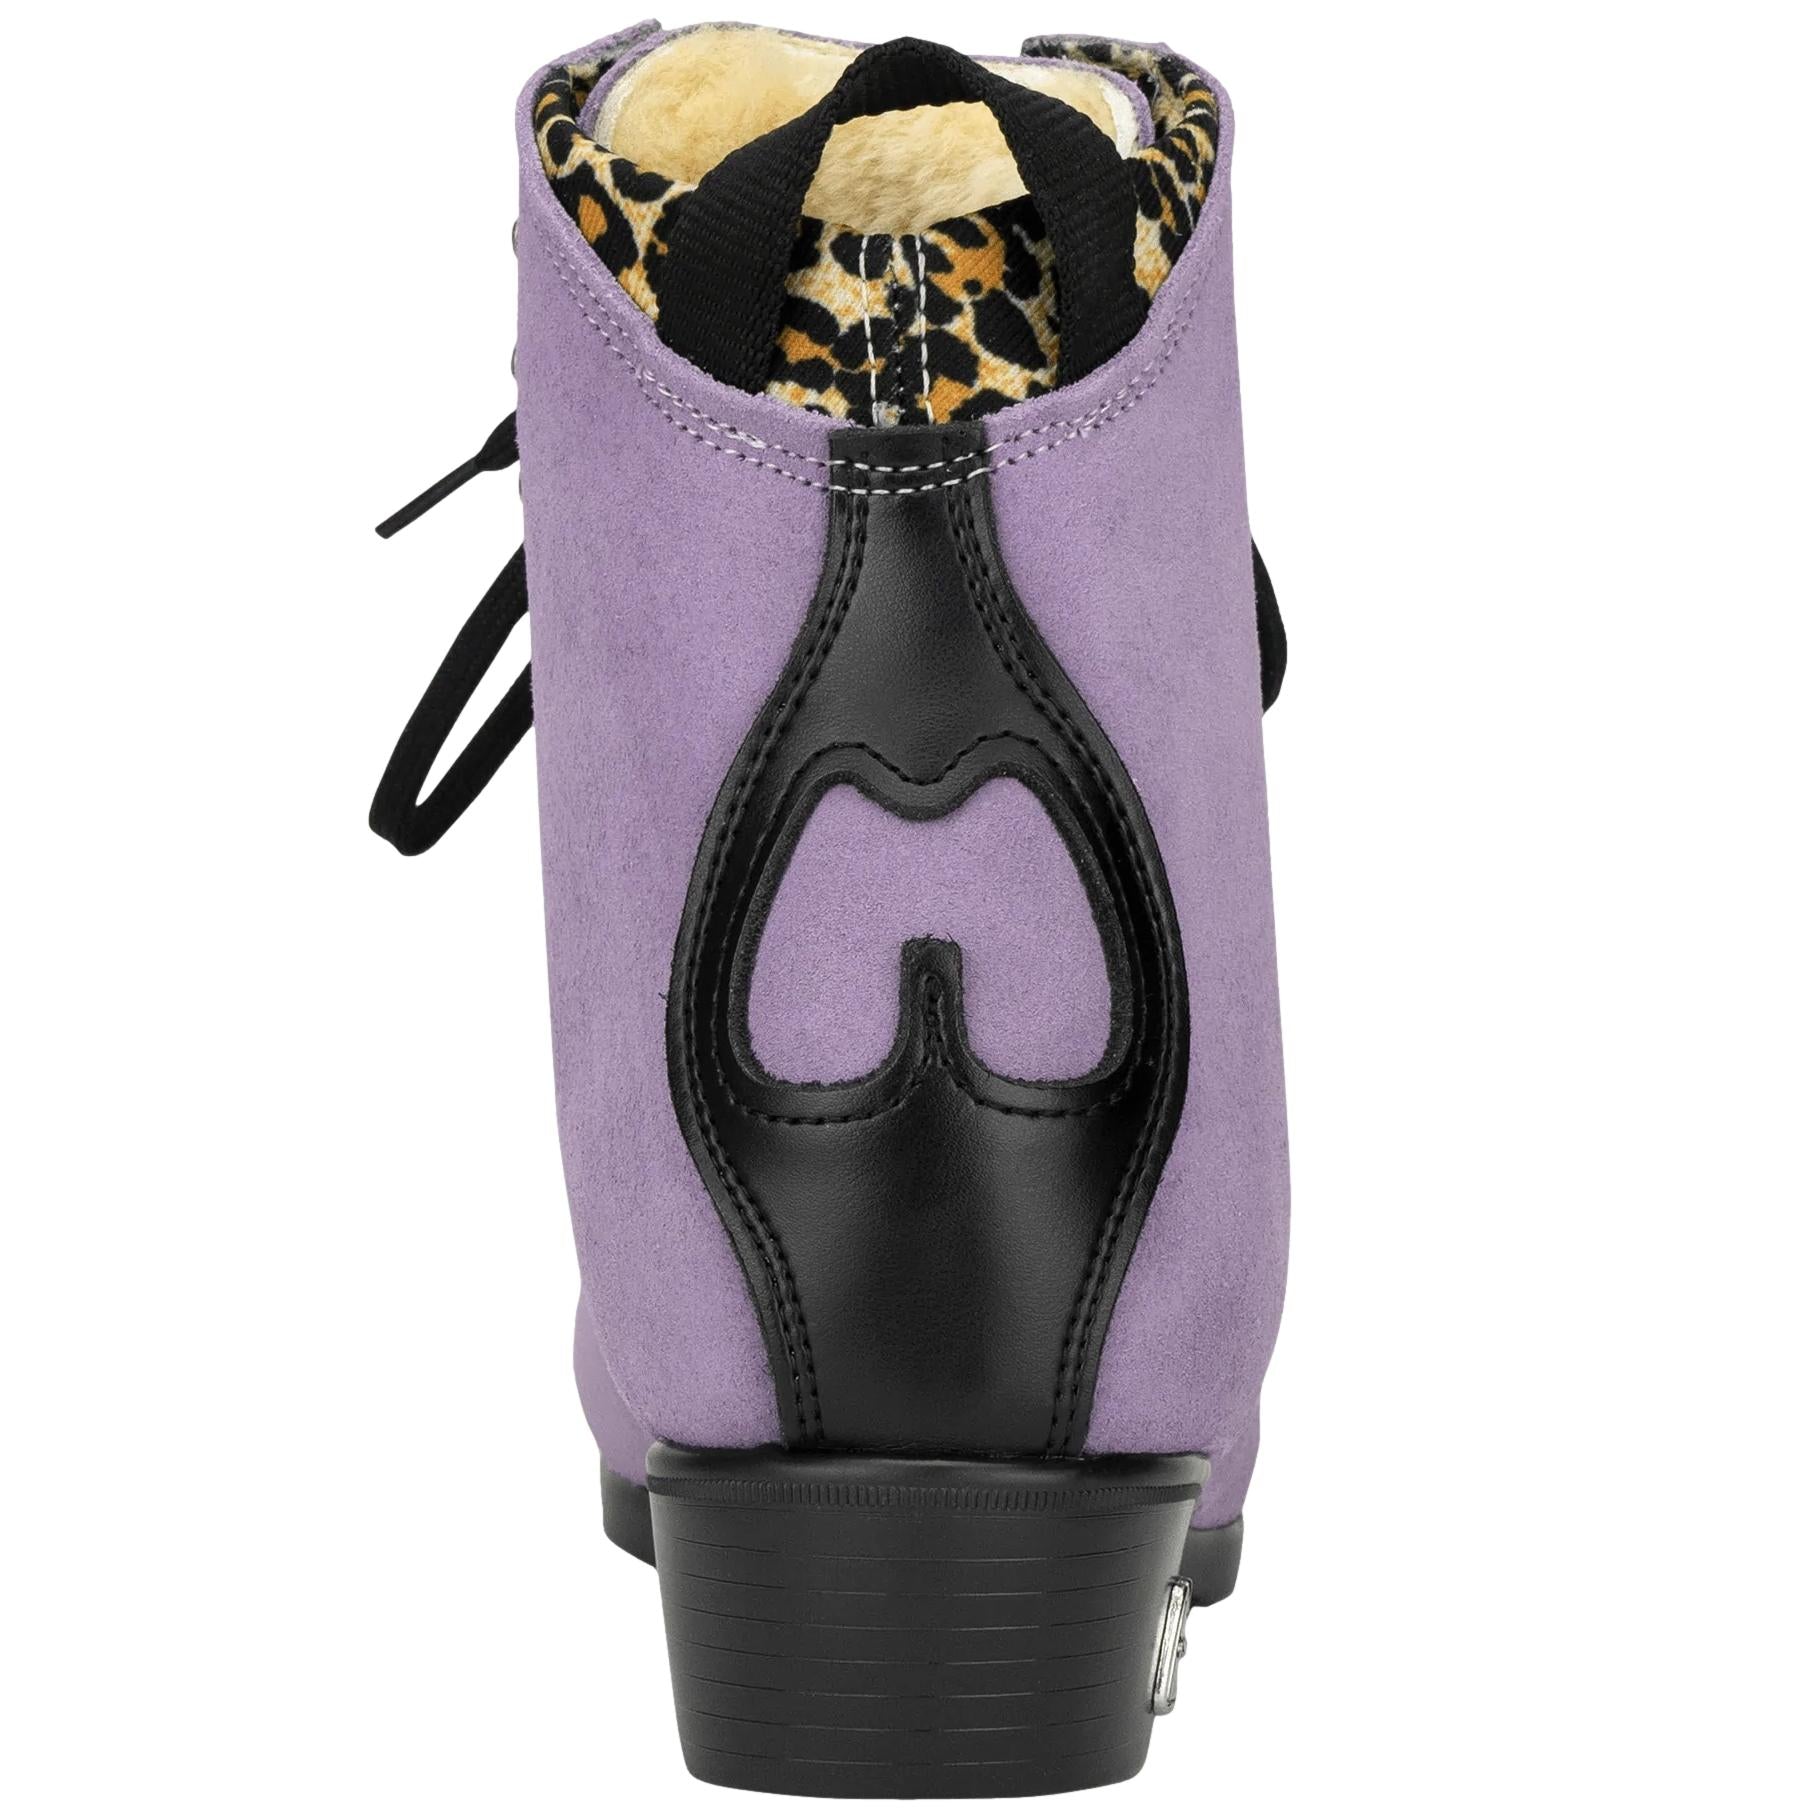 Moxi Jack 2 Lilac Rollerskate Boots